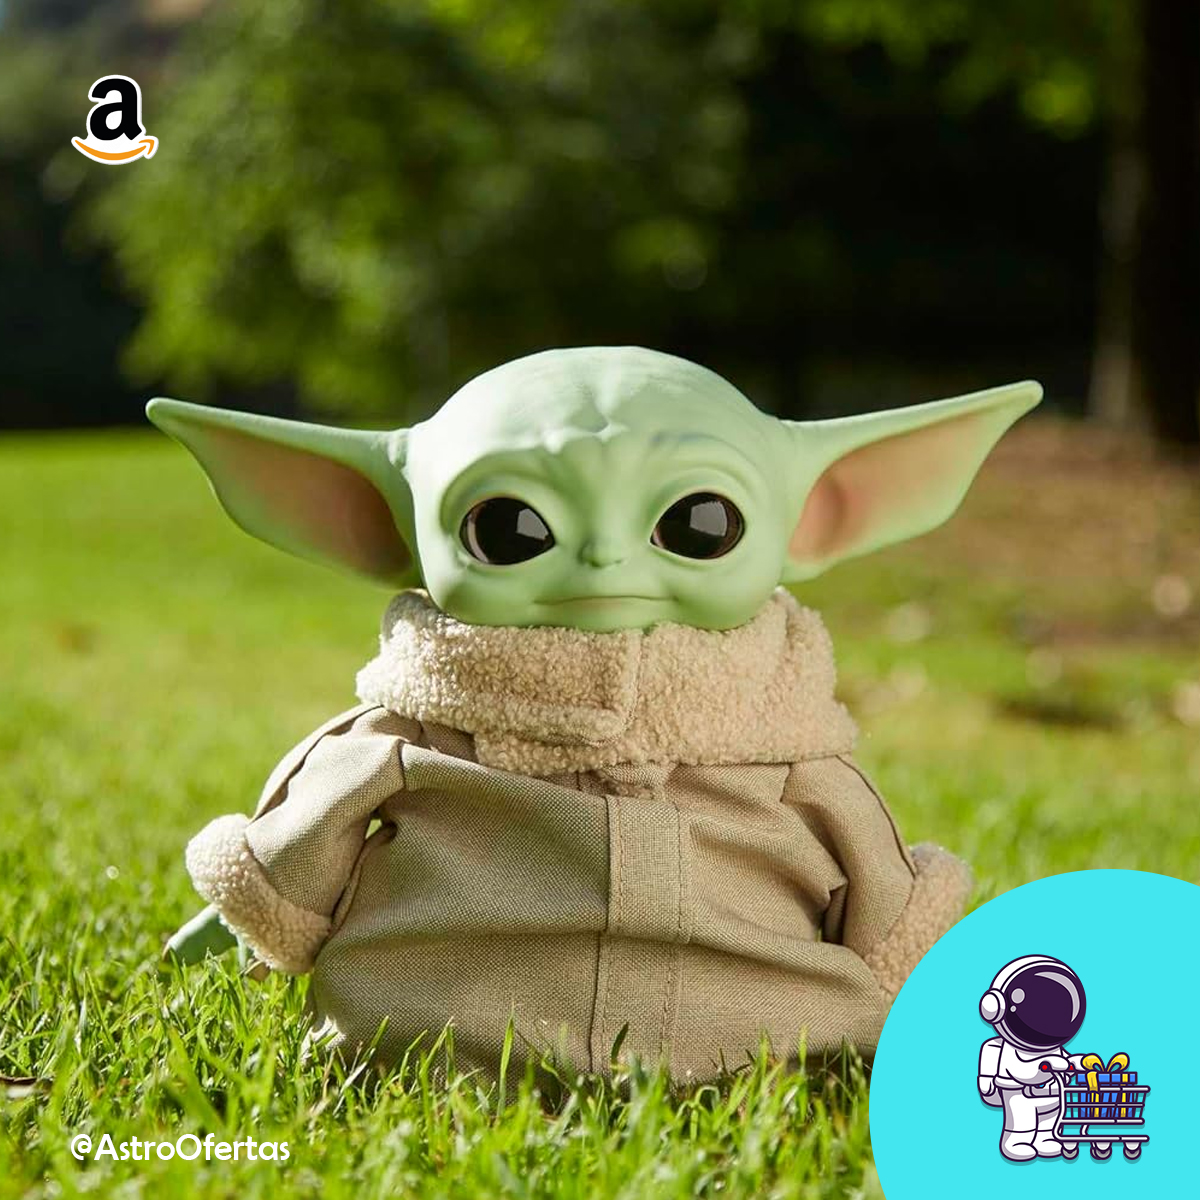 Hora de abraçar a fofura intergaláctica! O Mattel Plush Baby Yoda Star Wars The Child está com 13% de desconto, por R$199,90 na Amazon! 🌟🚀 #oferta #promo #promoção #desconto #Mattel #TheChild #StarWars #TheMandalorian #Grogu #Pelucia 

🔗 amzn.to/452Fh4U